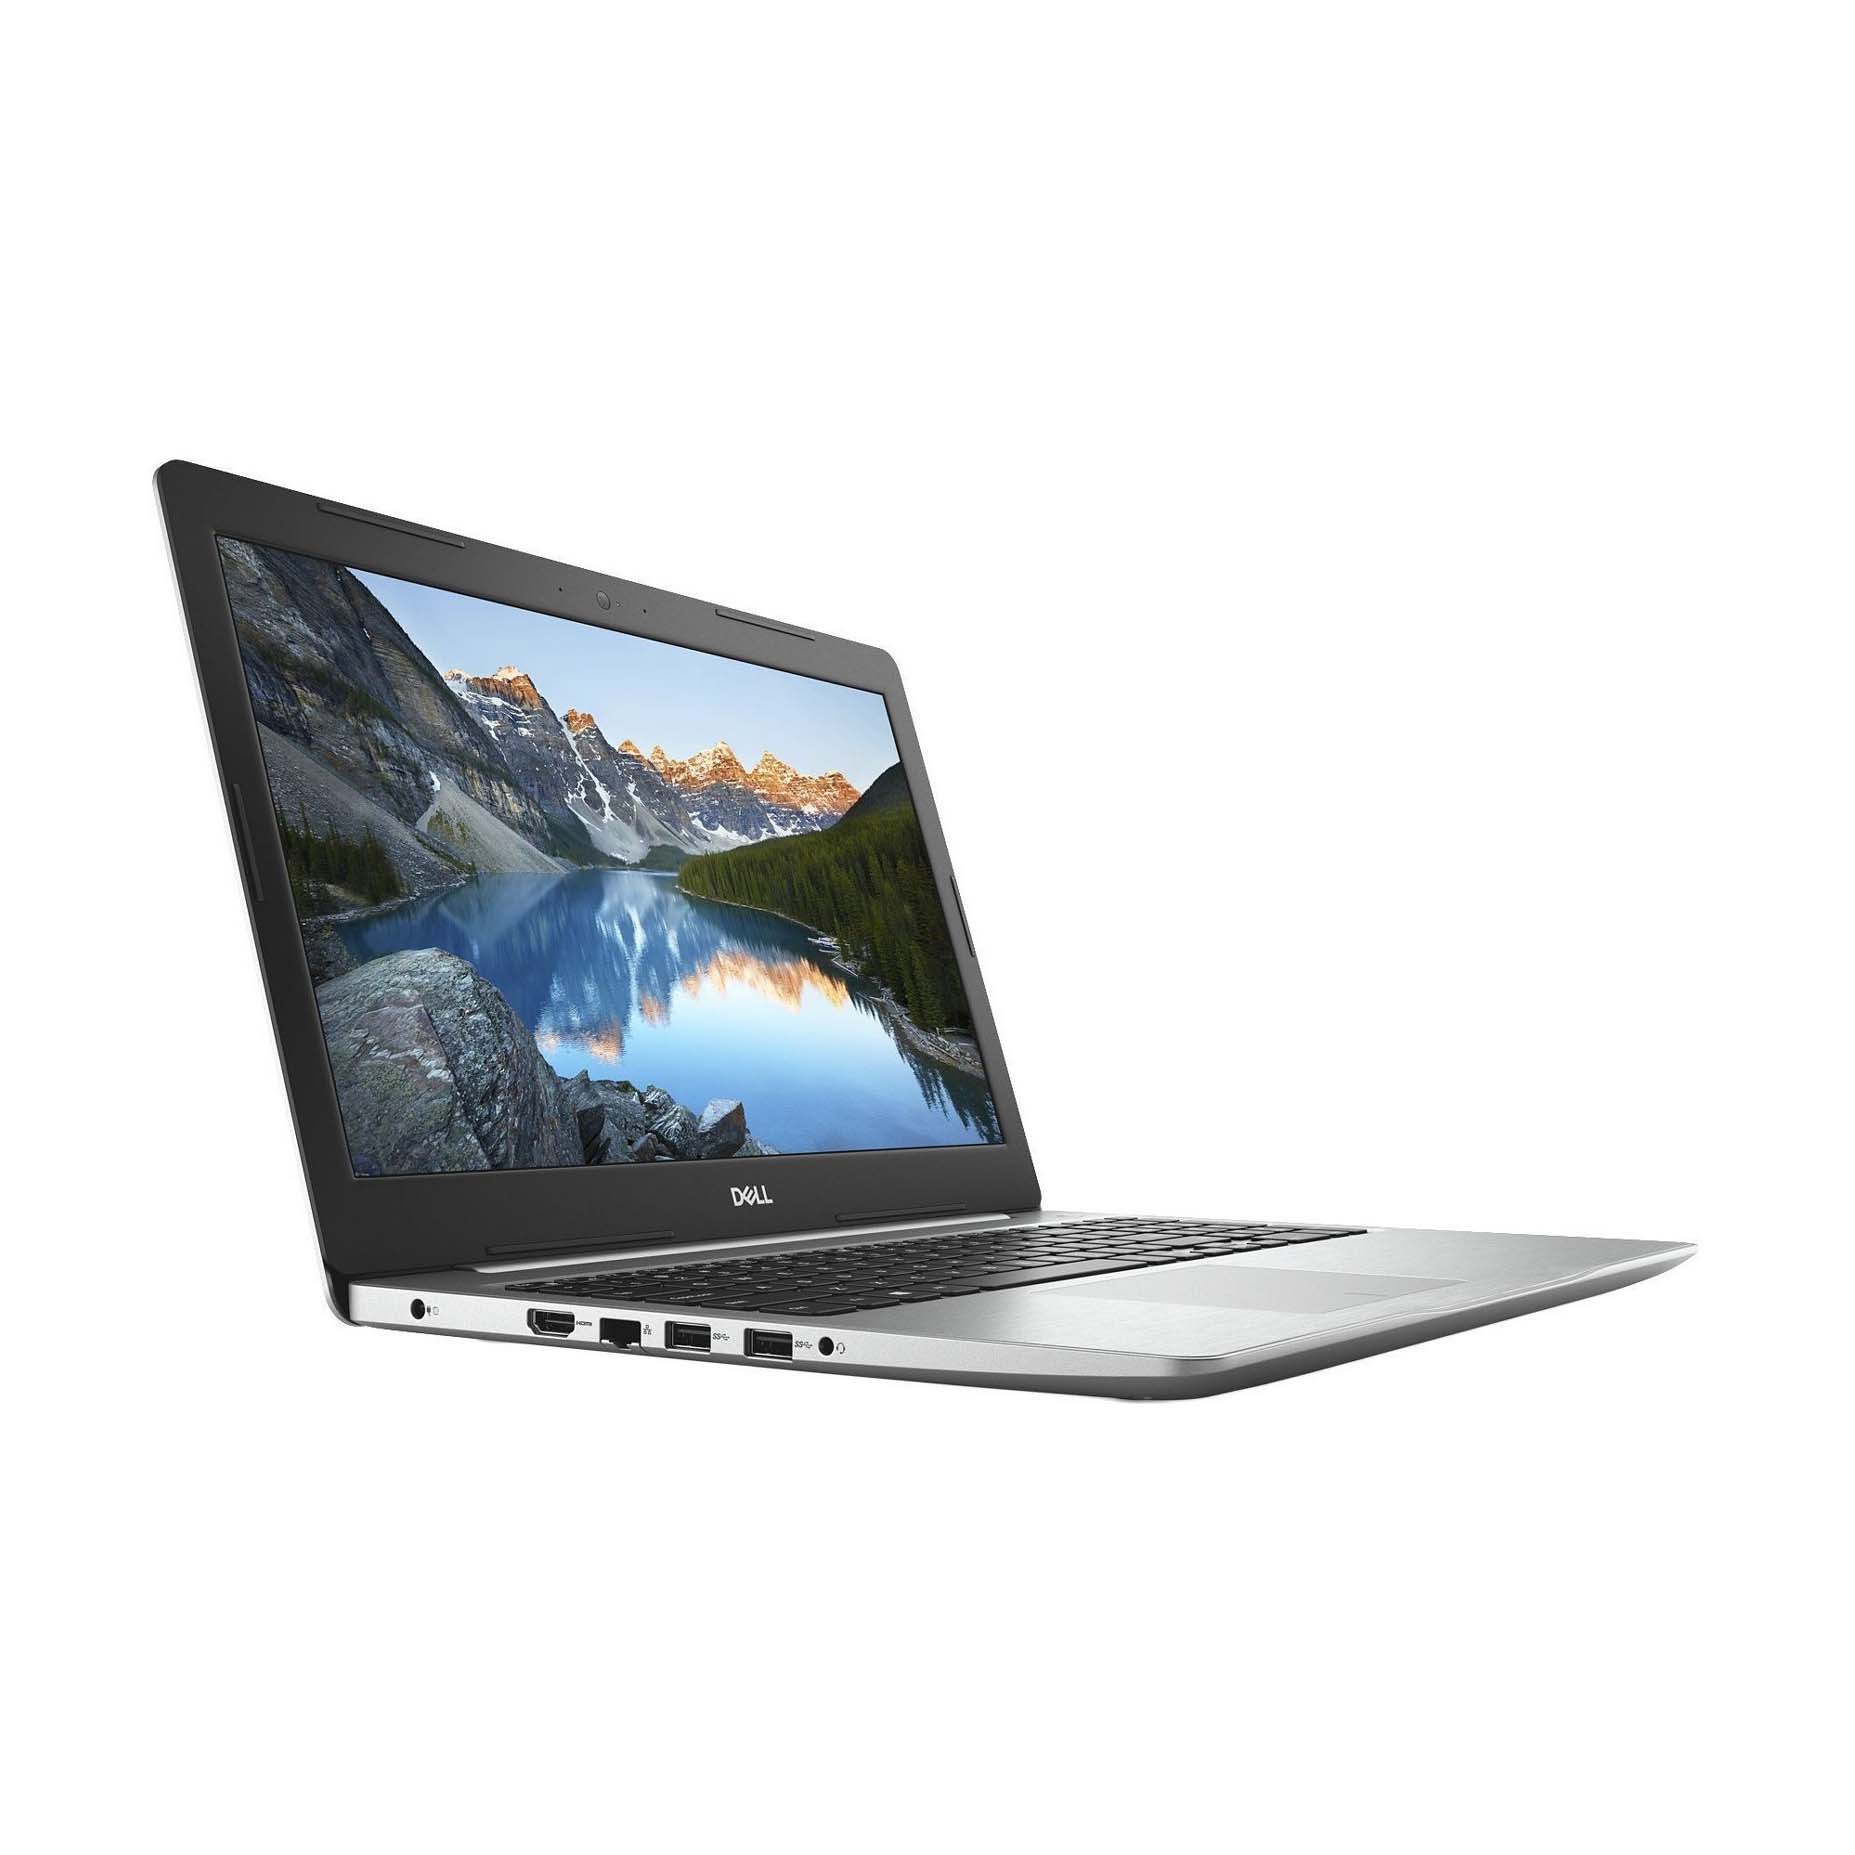 Harga Jual Laptop Dell Inspiron 15 5000 Series - 5570